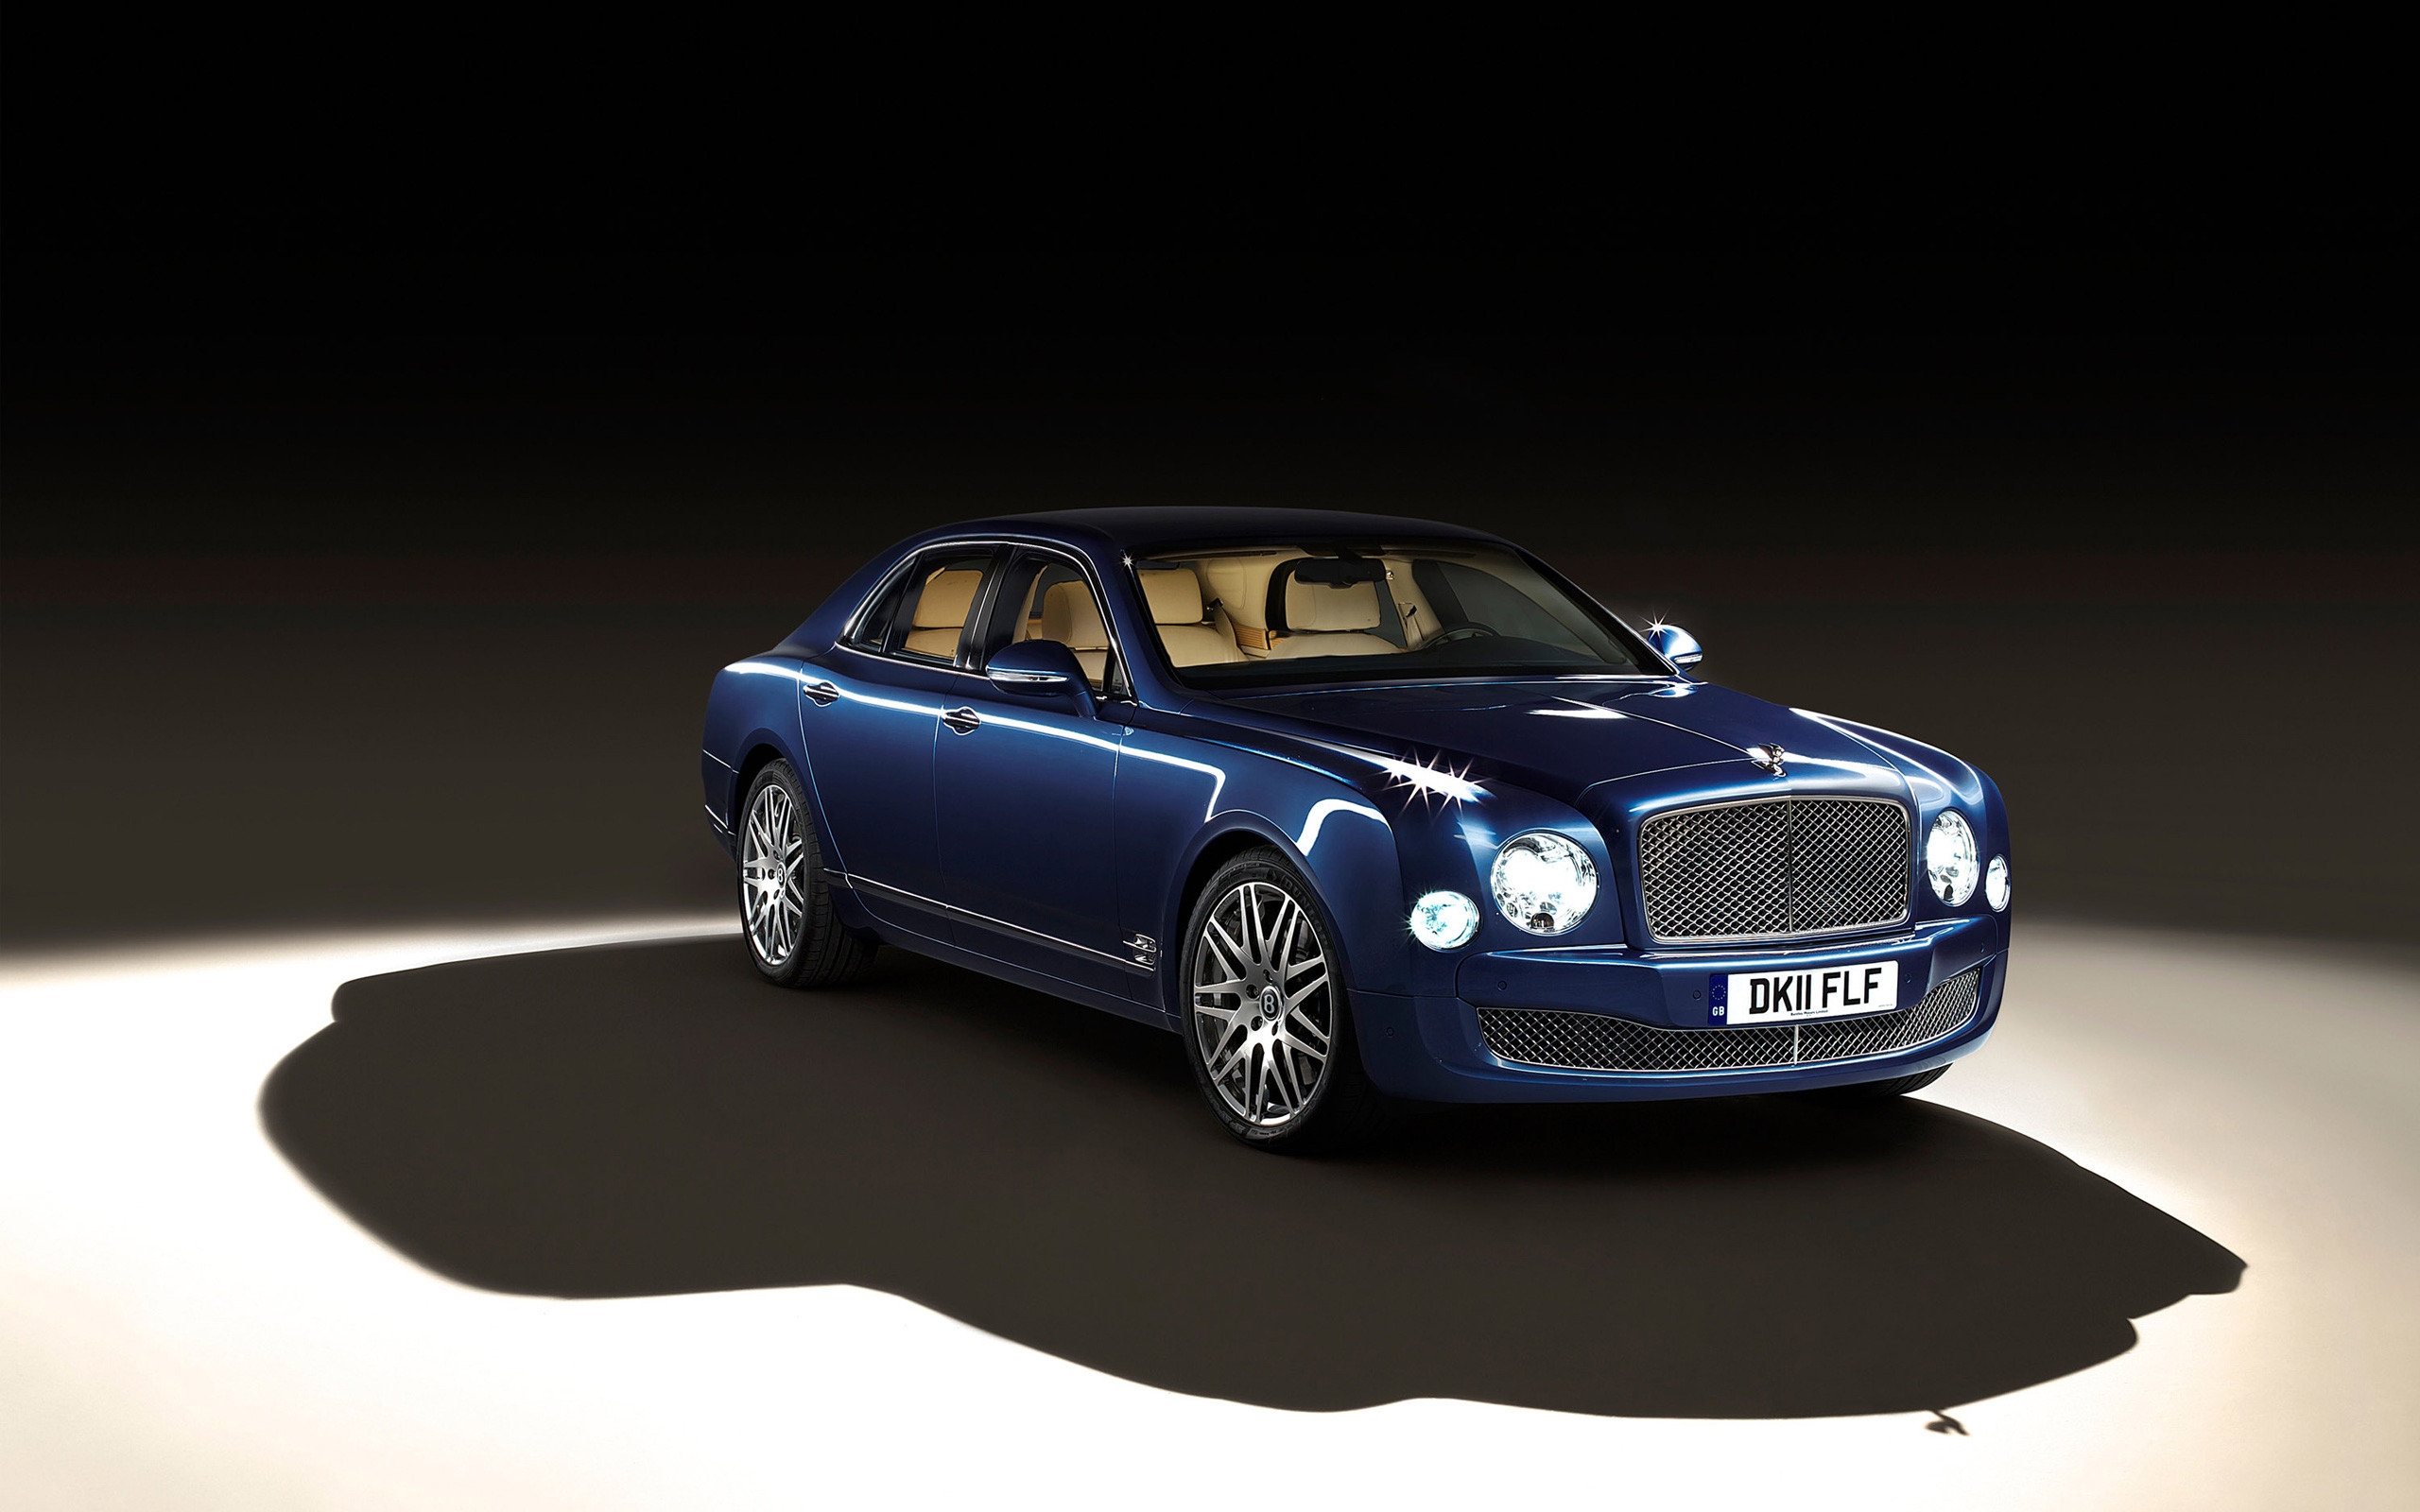 2012 Bentley Mulsanne Executive for 2560 x 1600 widescreen resolution